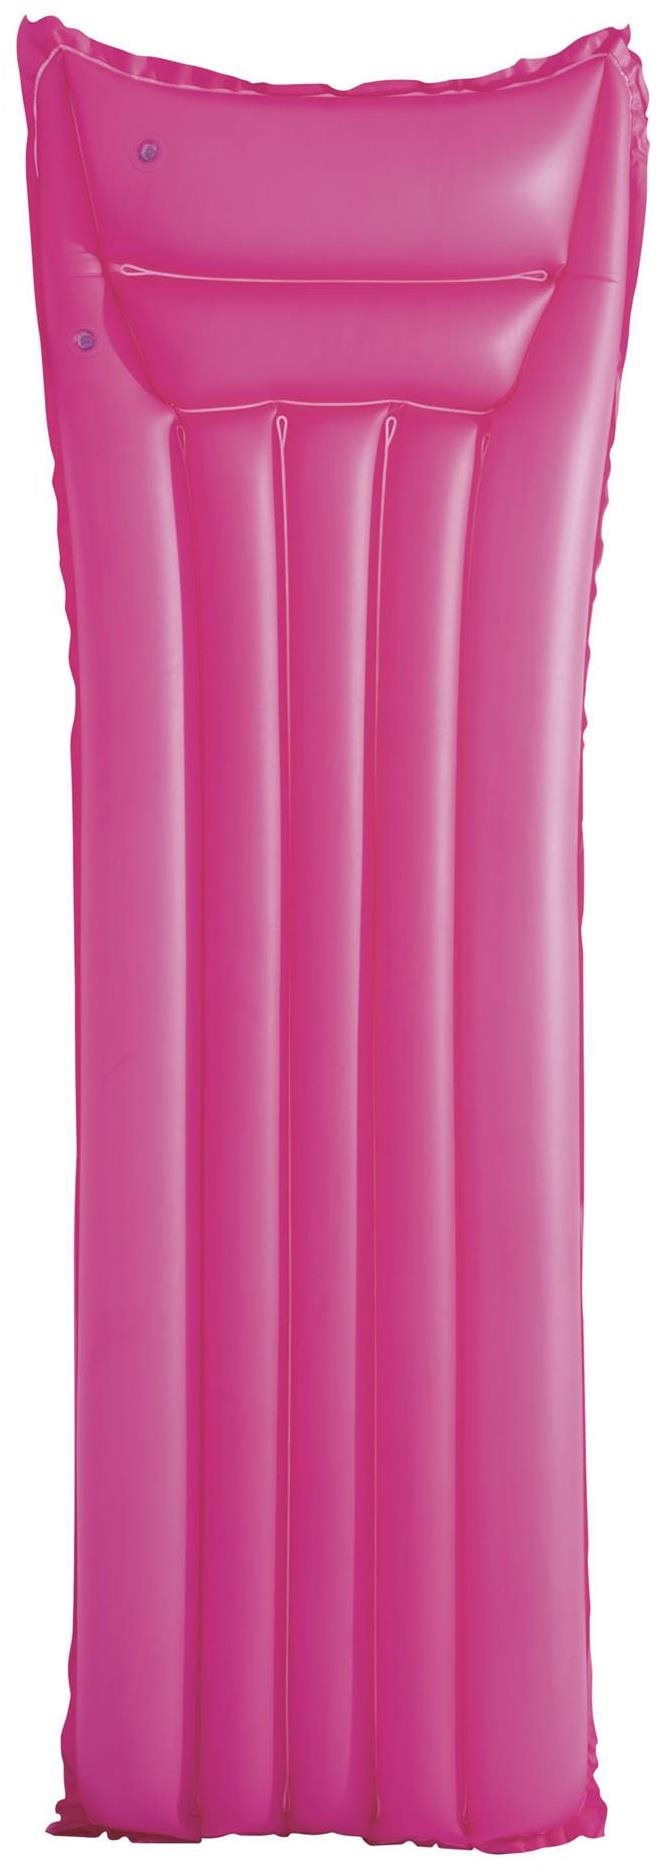 Gumimatrac, rózsaszín, 183×69 cm